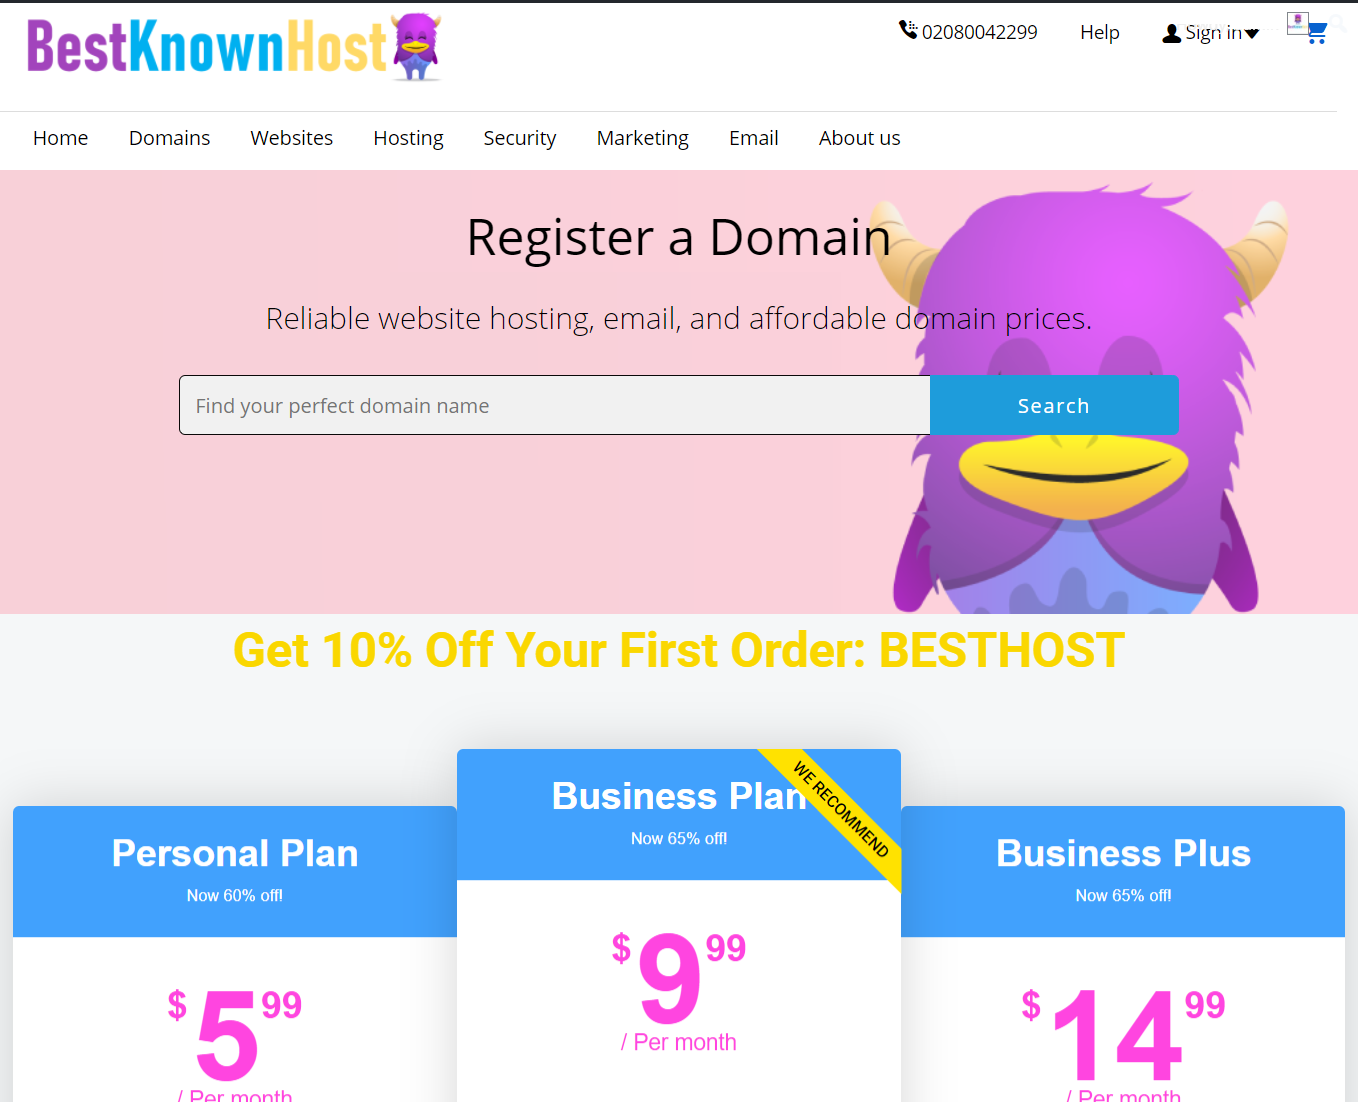 Find detailed information about BestKnownHost